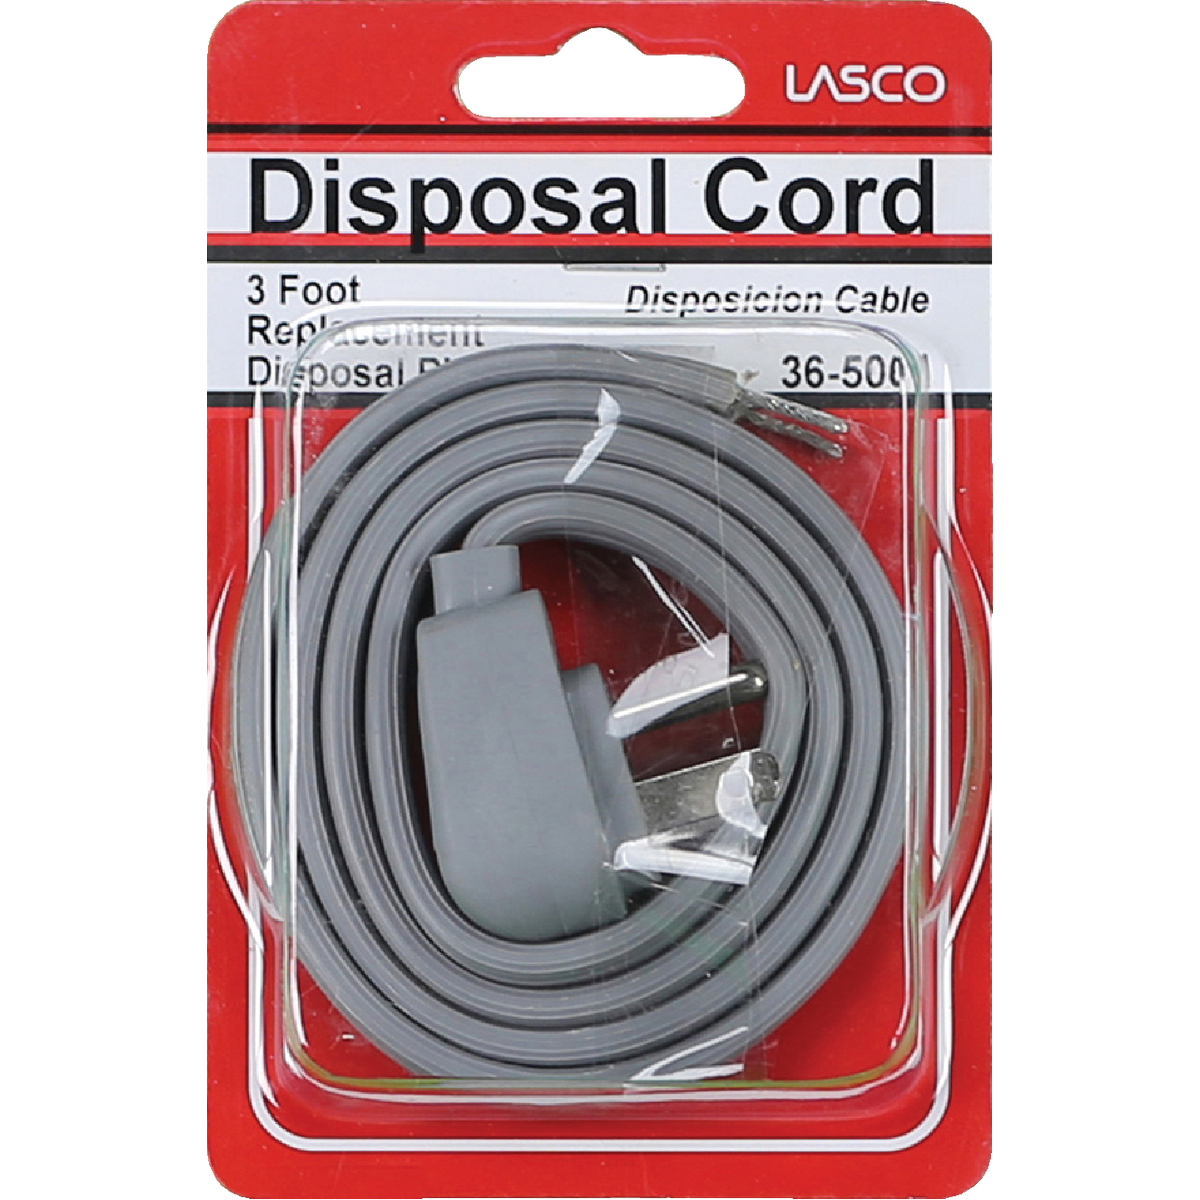 Disposer Power Cord